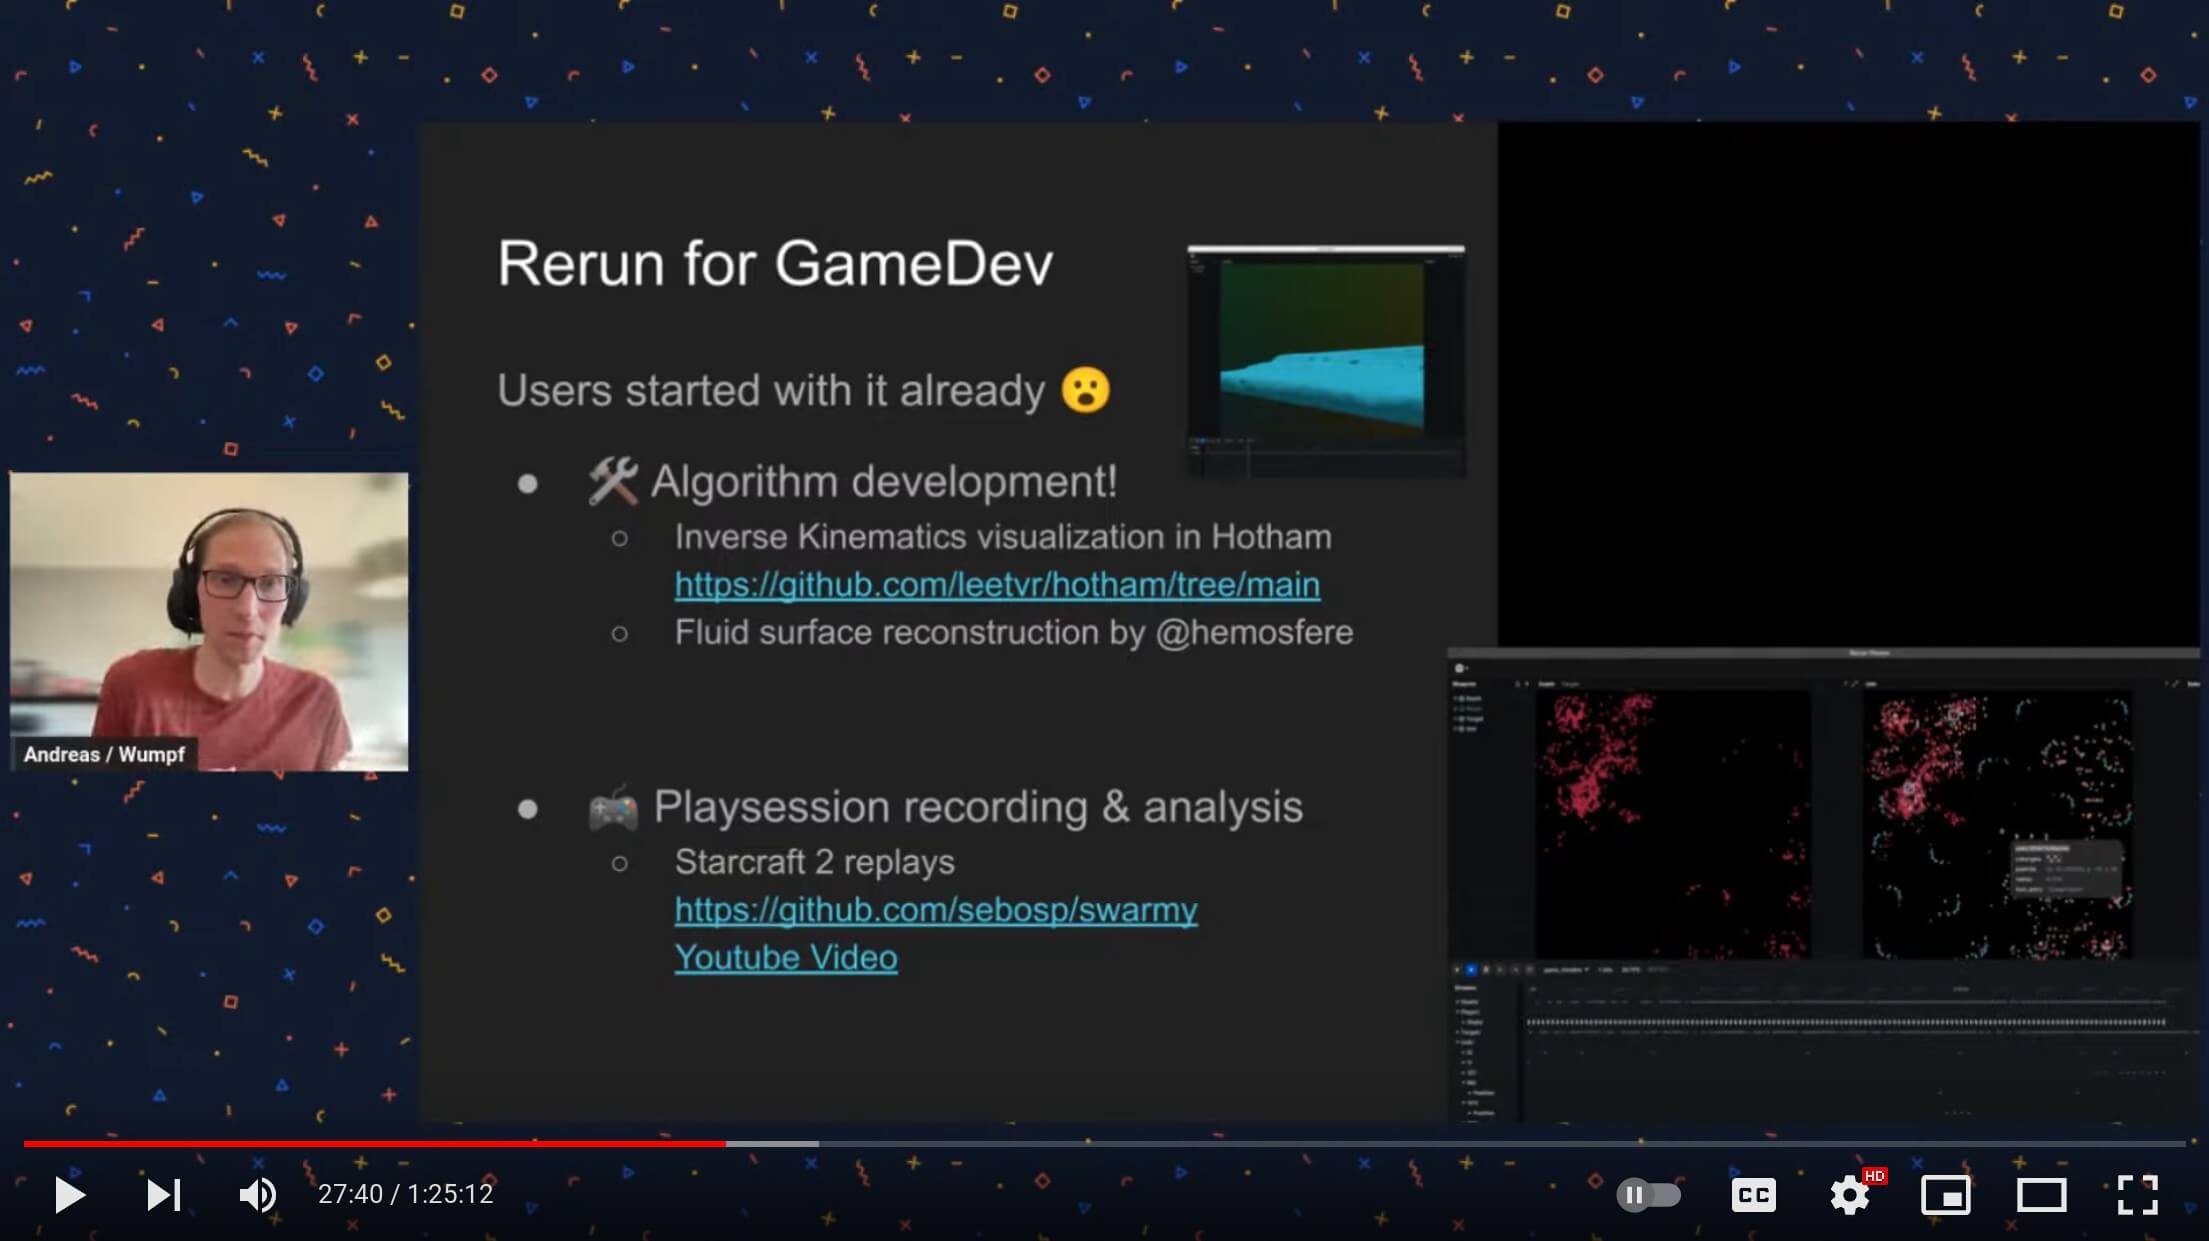 youtube preview: "rerun fir gamedev" slide